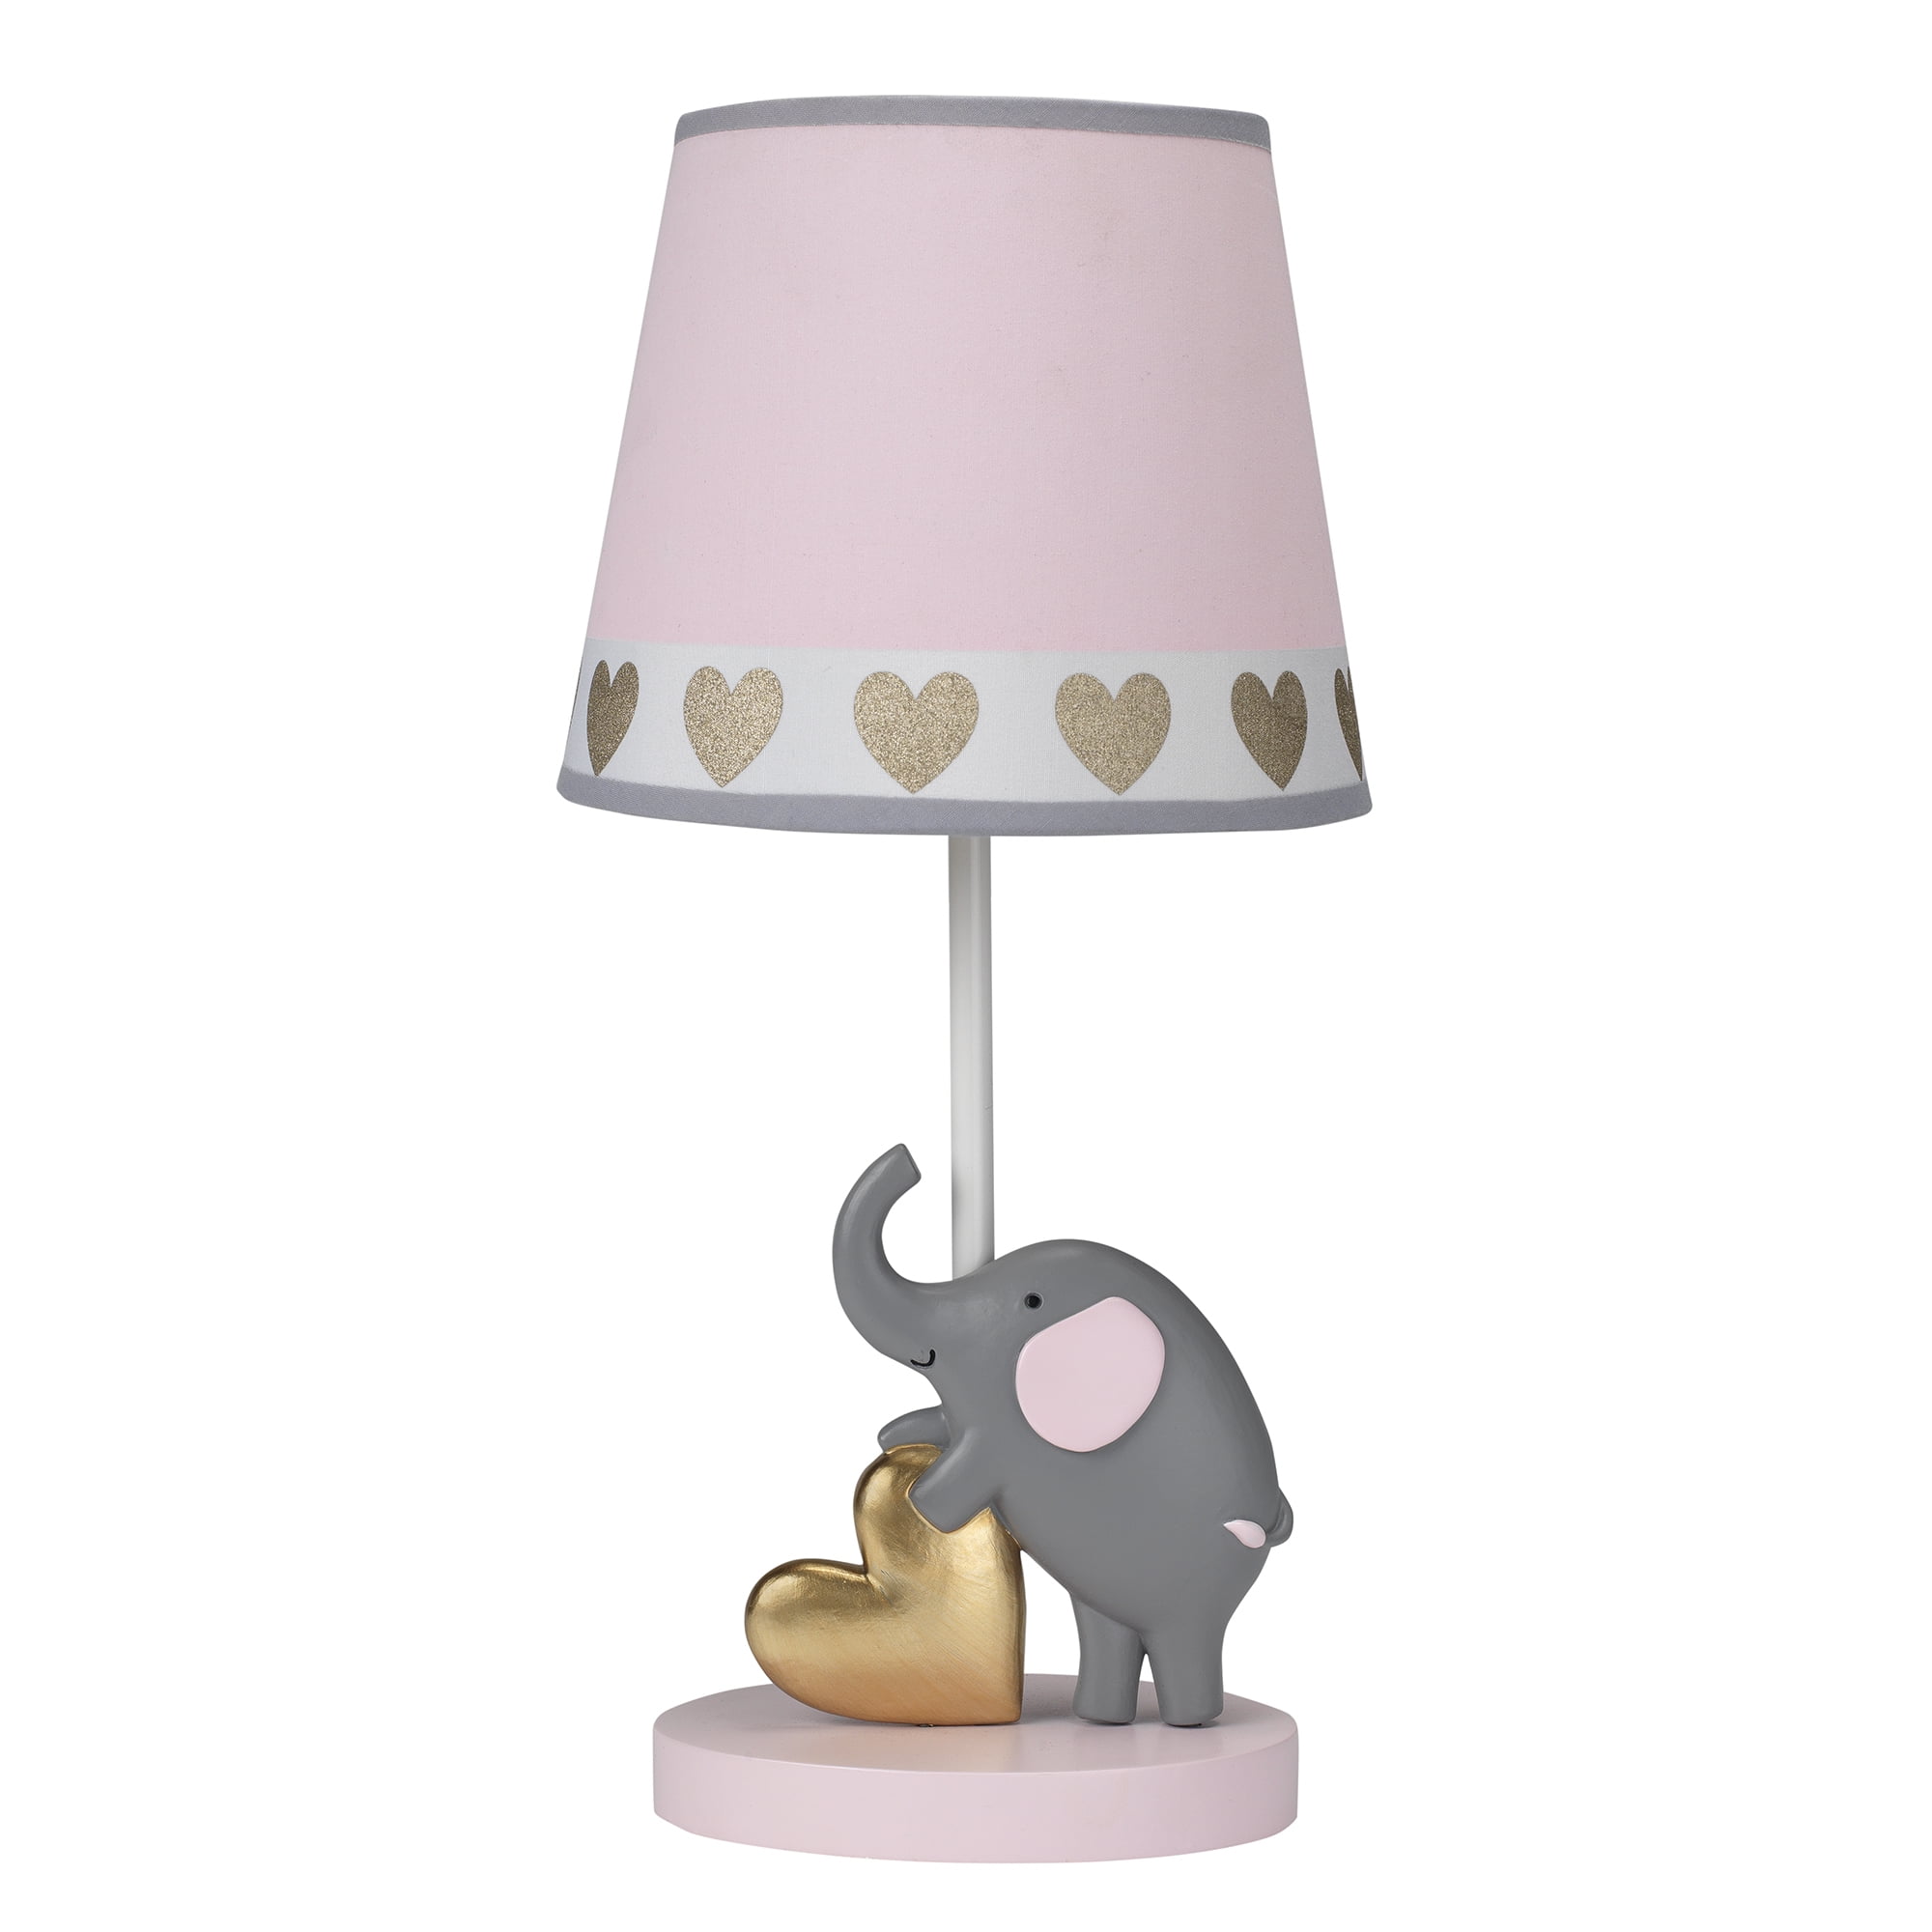 Bedtime Originals Eloise Nursery Lamp, Light Pink Lamp Shade For Nursery